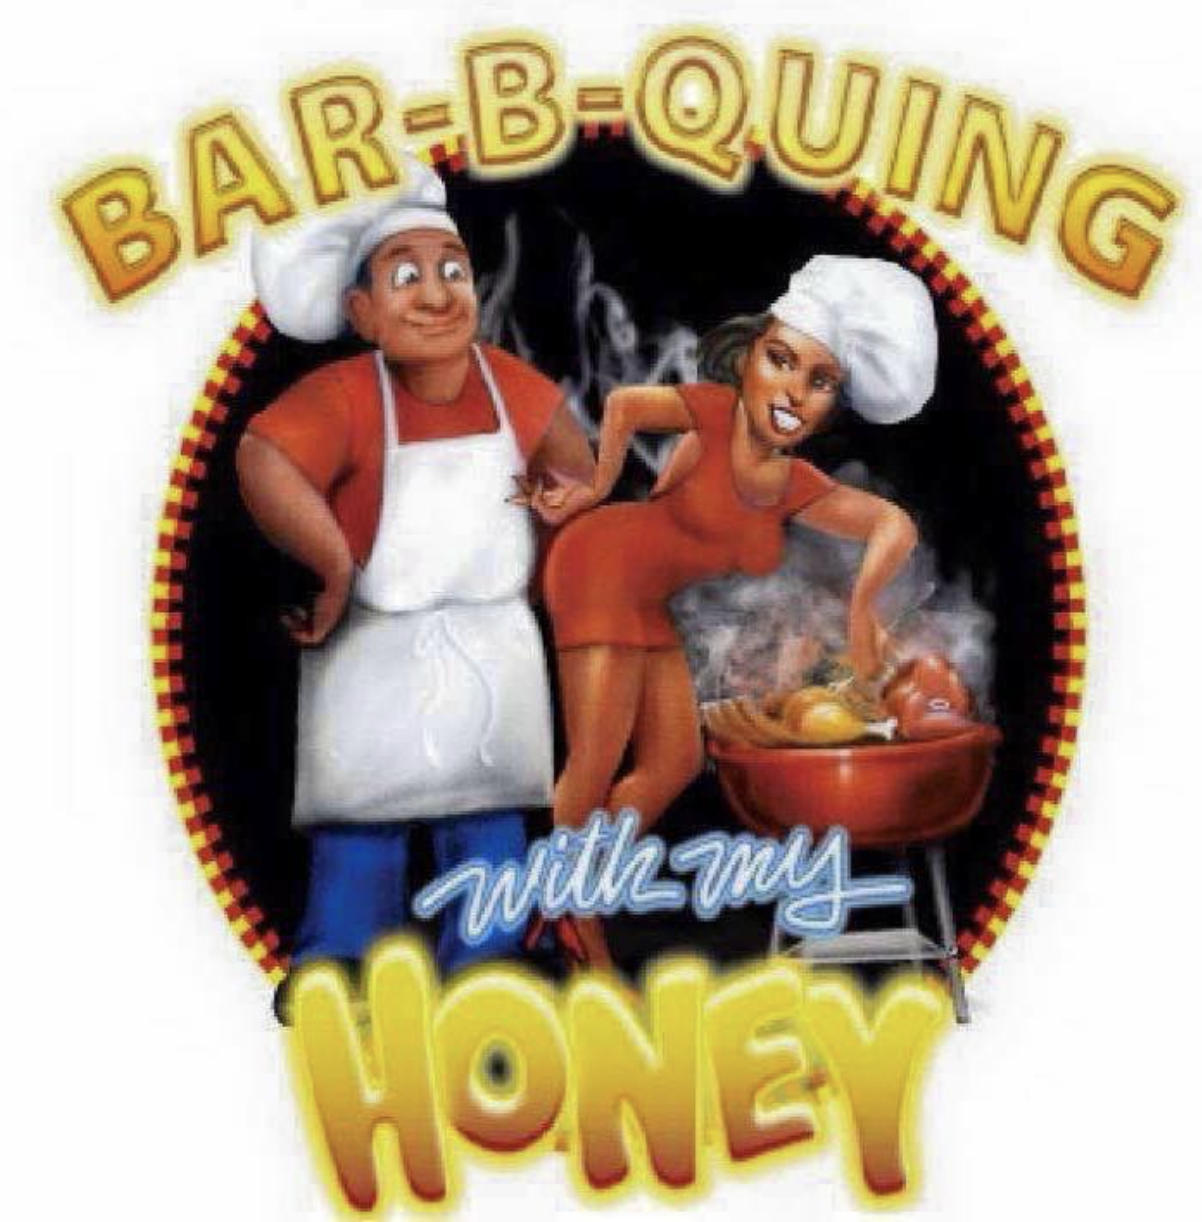 Bar -B-Quing With My Honey - Daphin St 2617 Dauphin Street